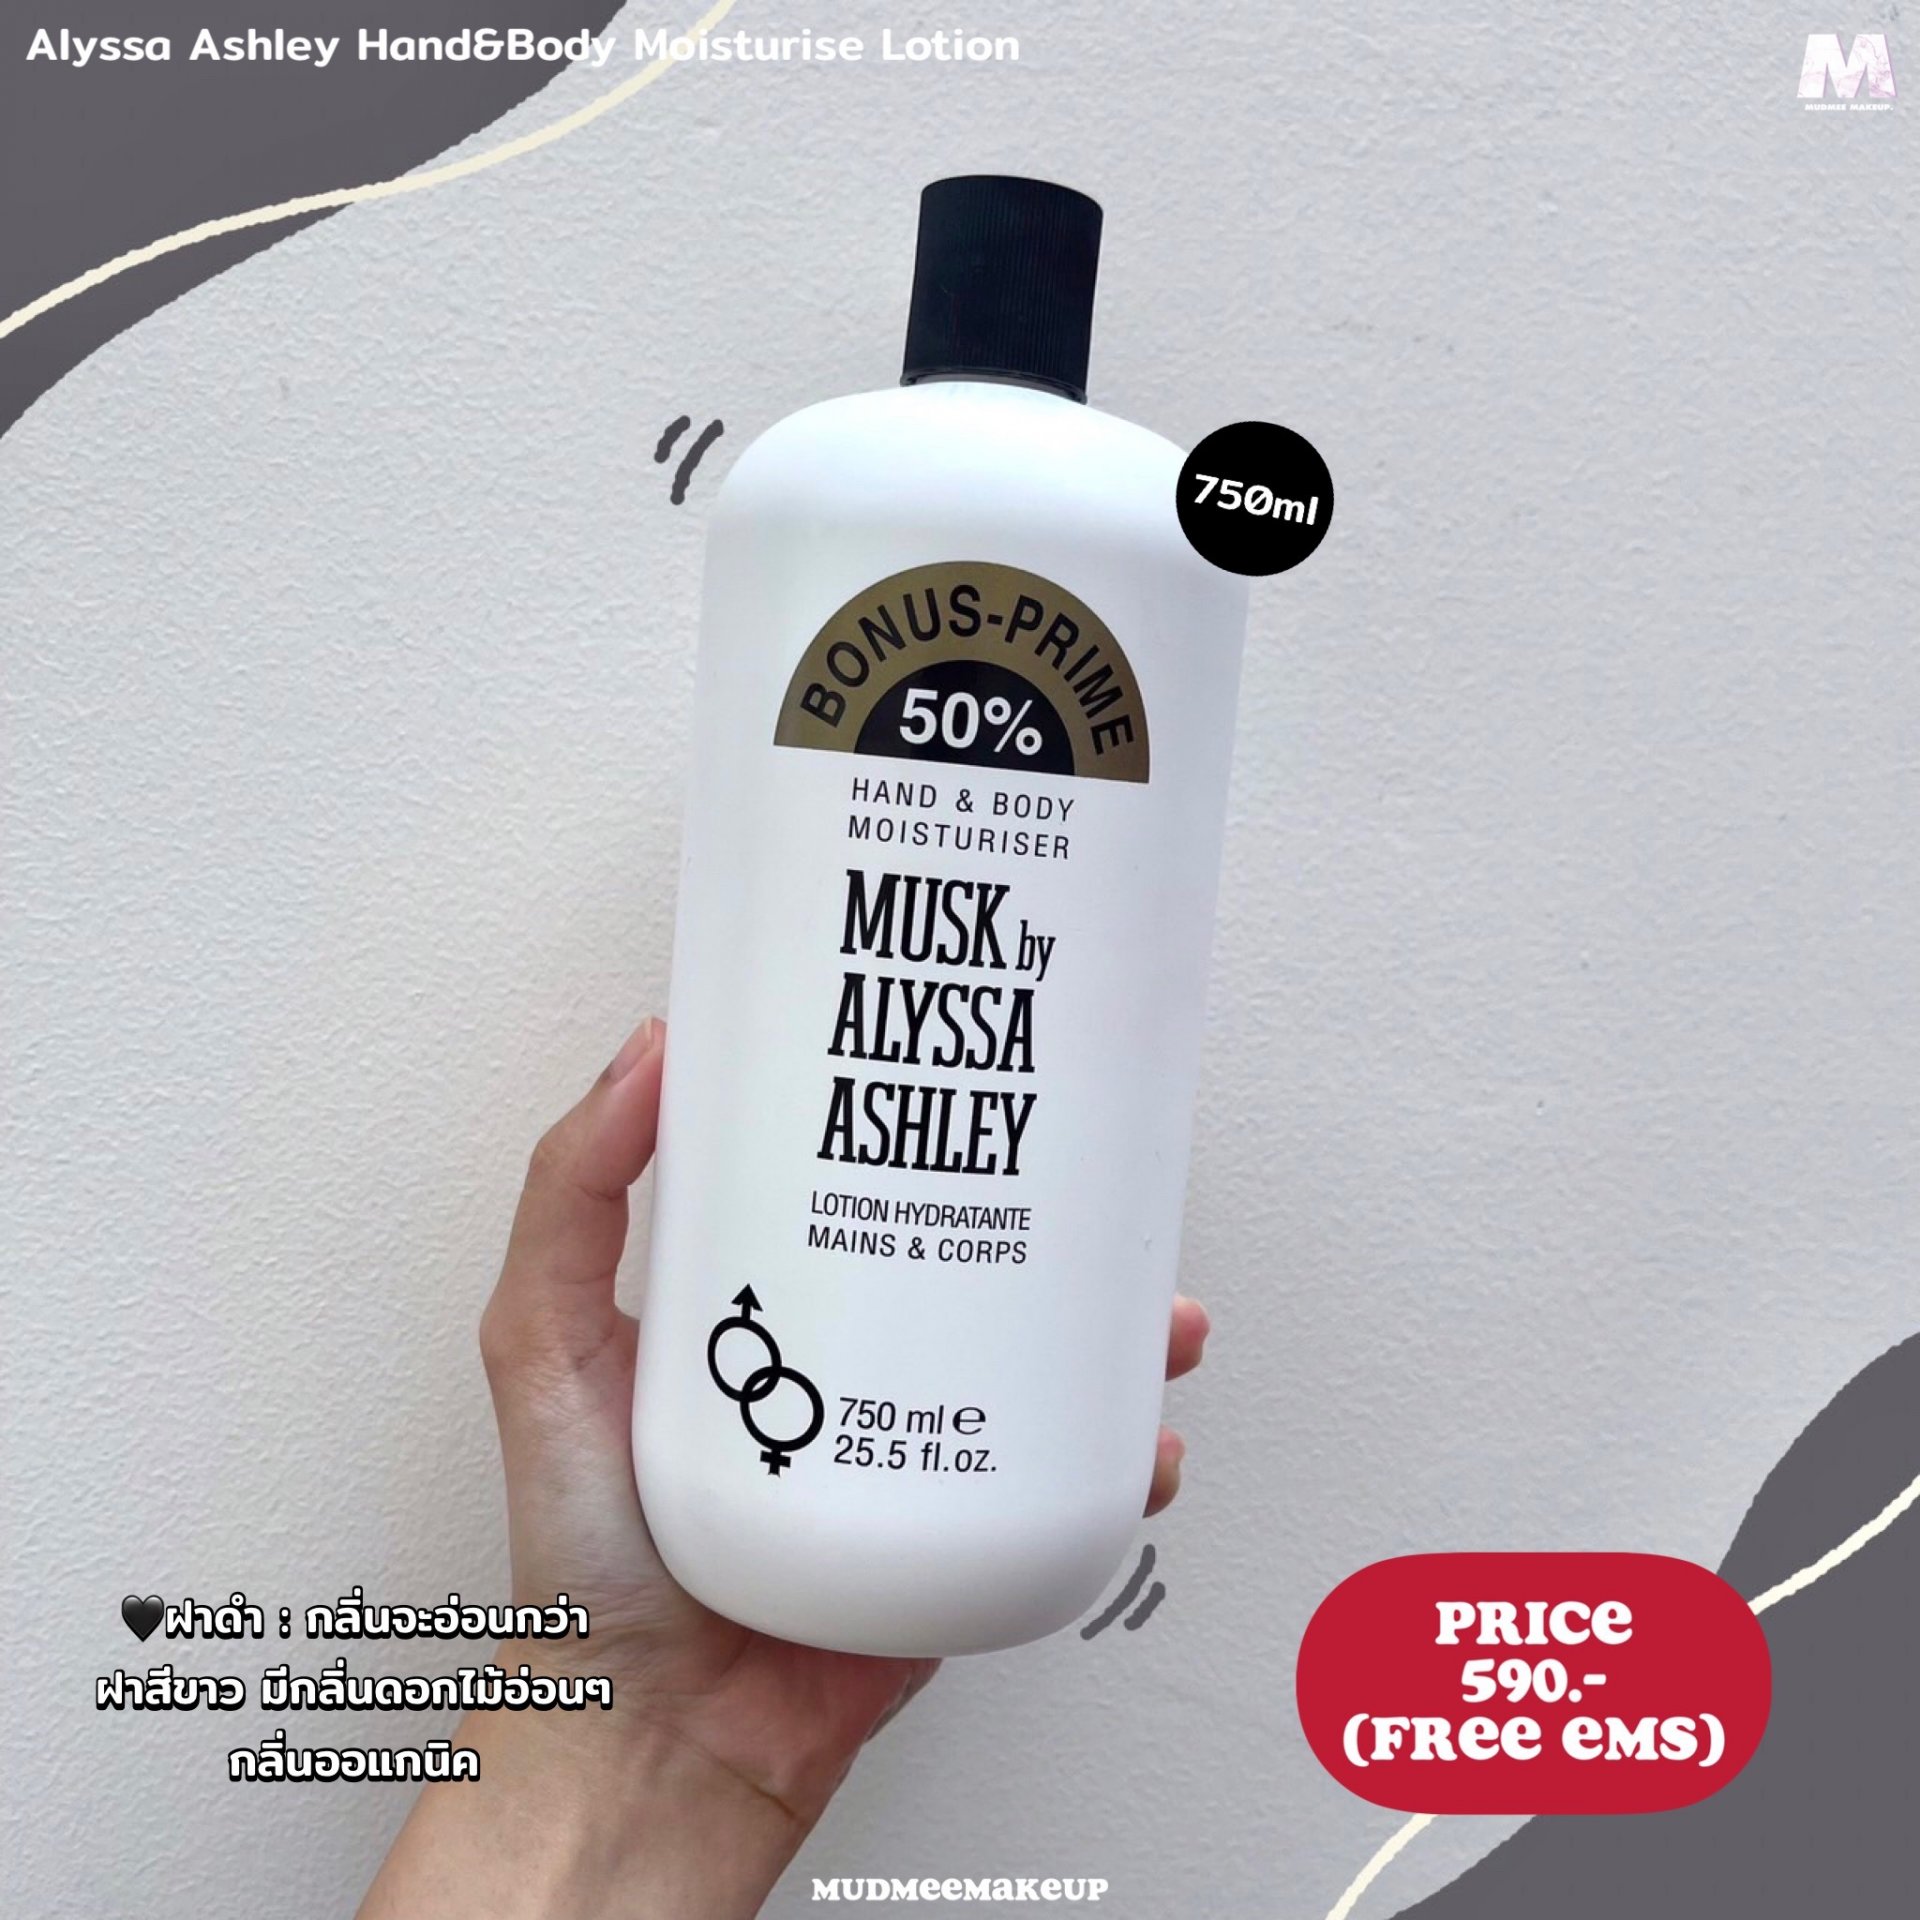 Alyssa Ashley Musk Hand and Body Moisturiser Lotion 750ml (ฝาดำ)